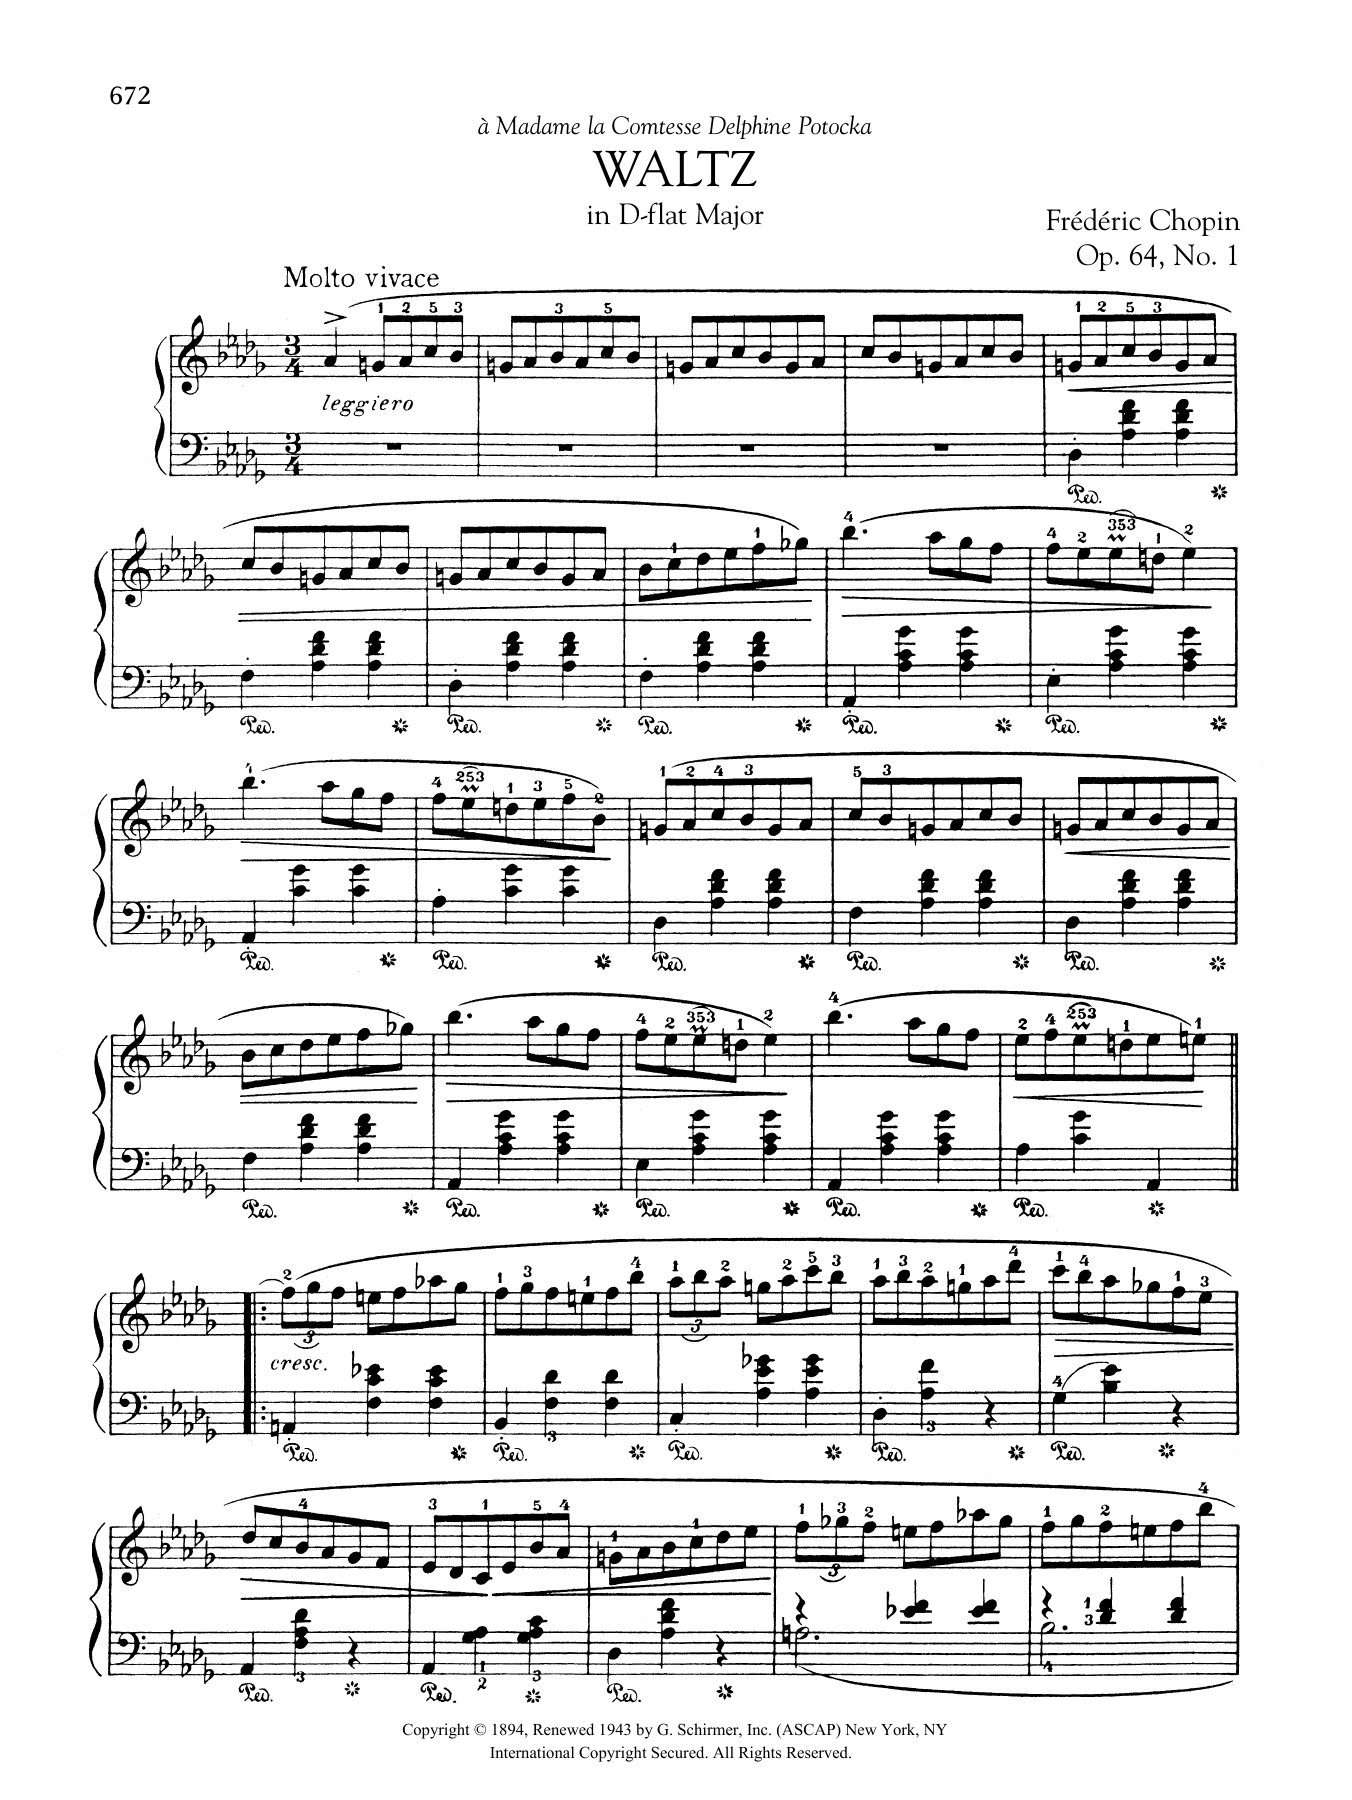 Download Frederic Chopin Waltz in D-flat Major, Op. 64, No. 1 Sheet Music